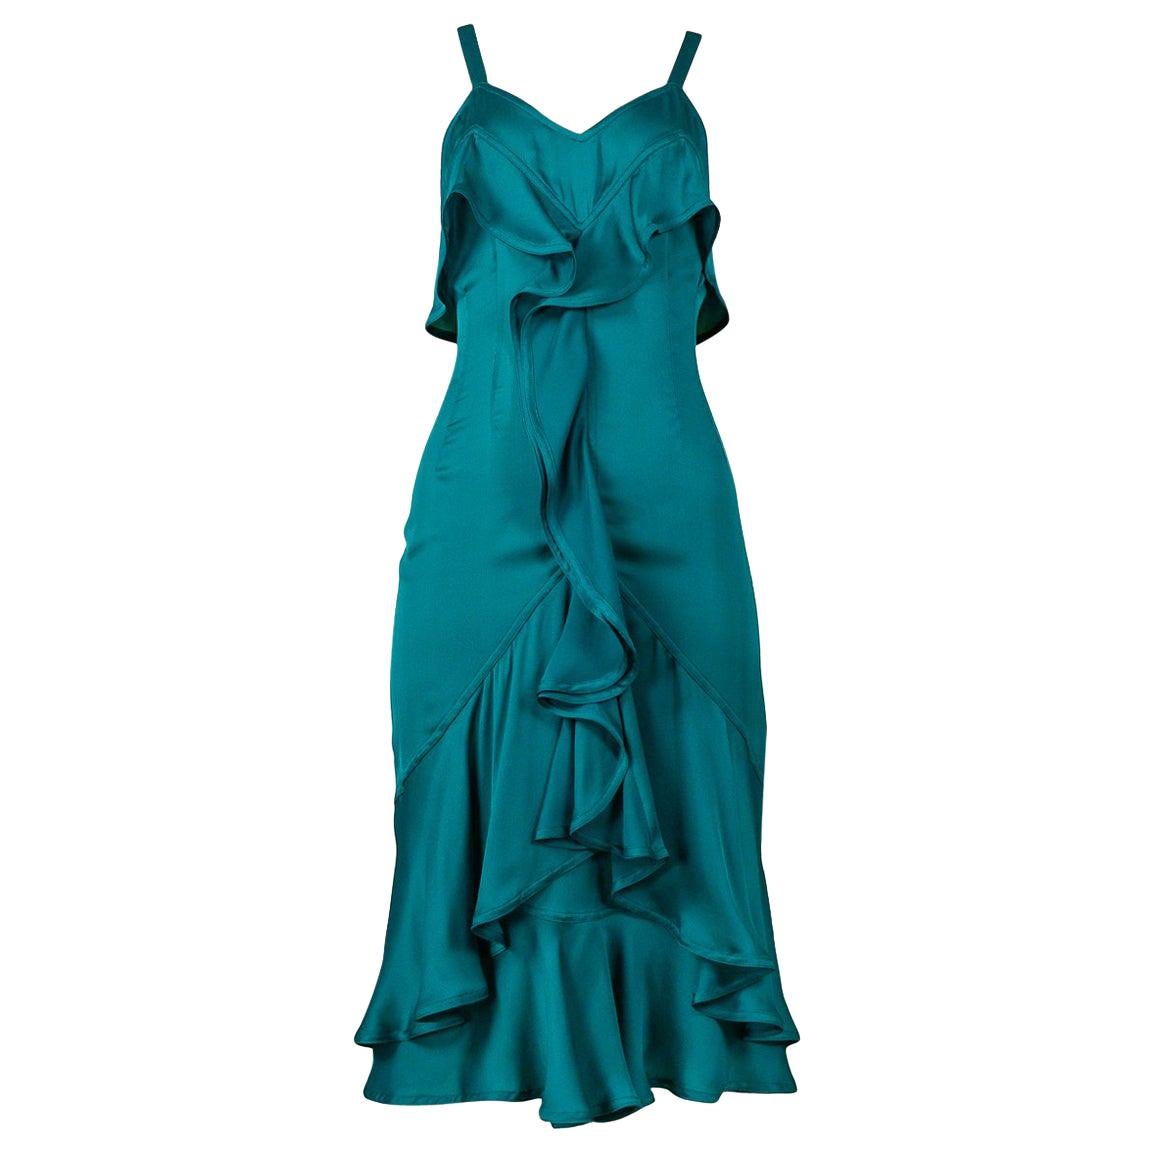 Vintage Tom Ford for Yves Saint Laurent Teal Green Silk Ruffle Dress 2003